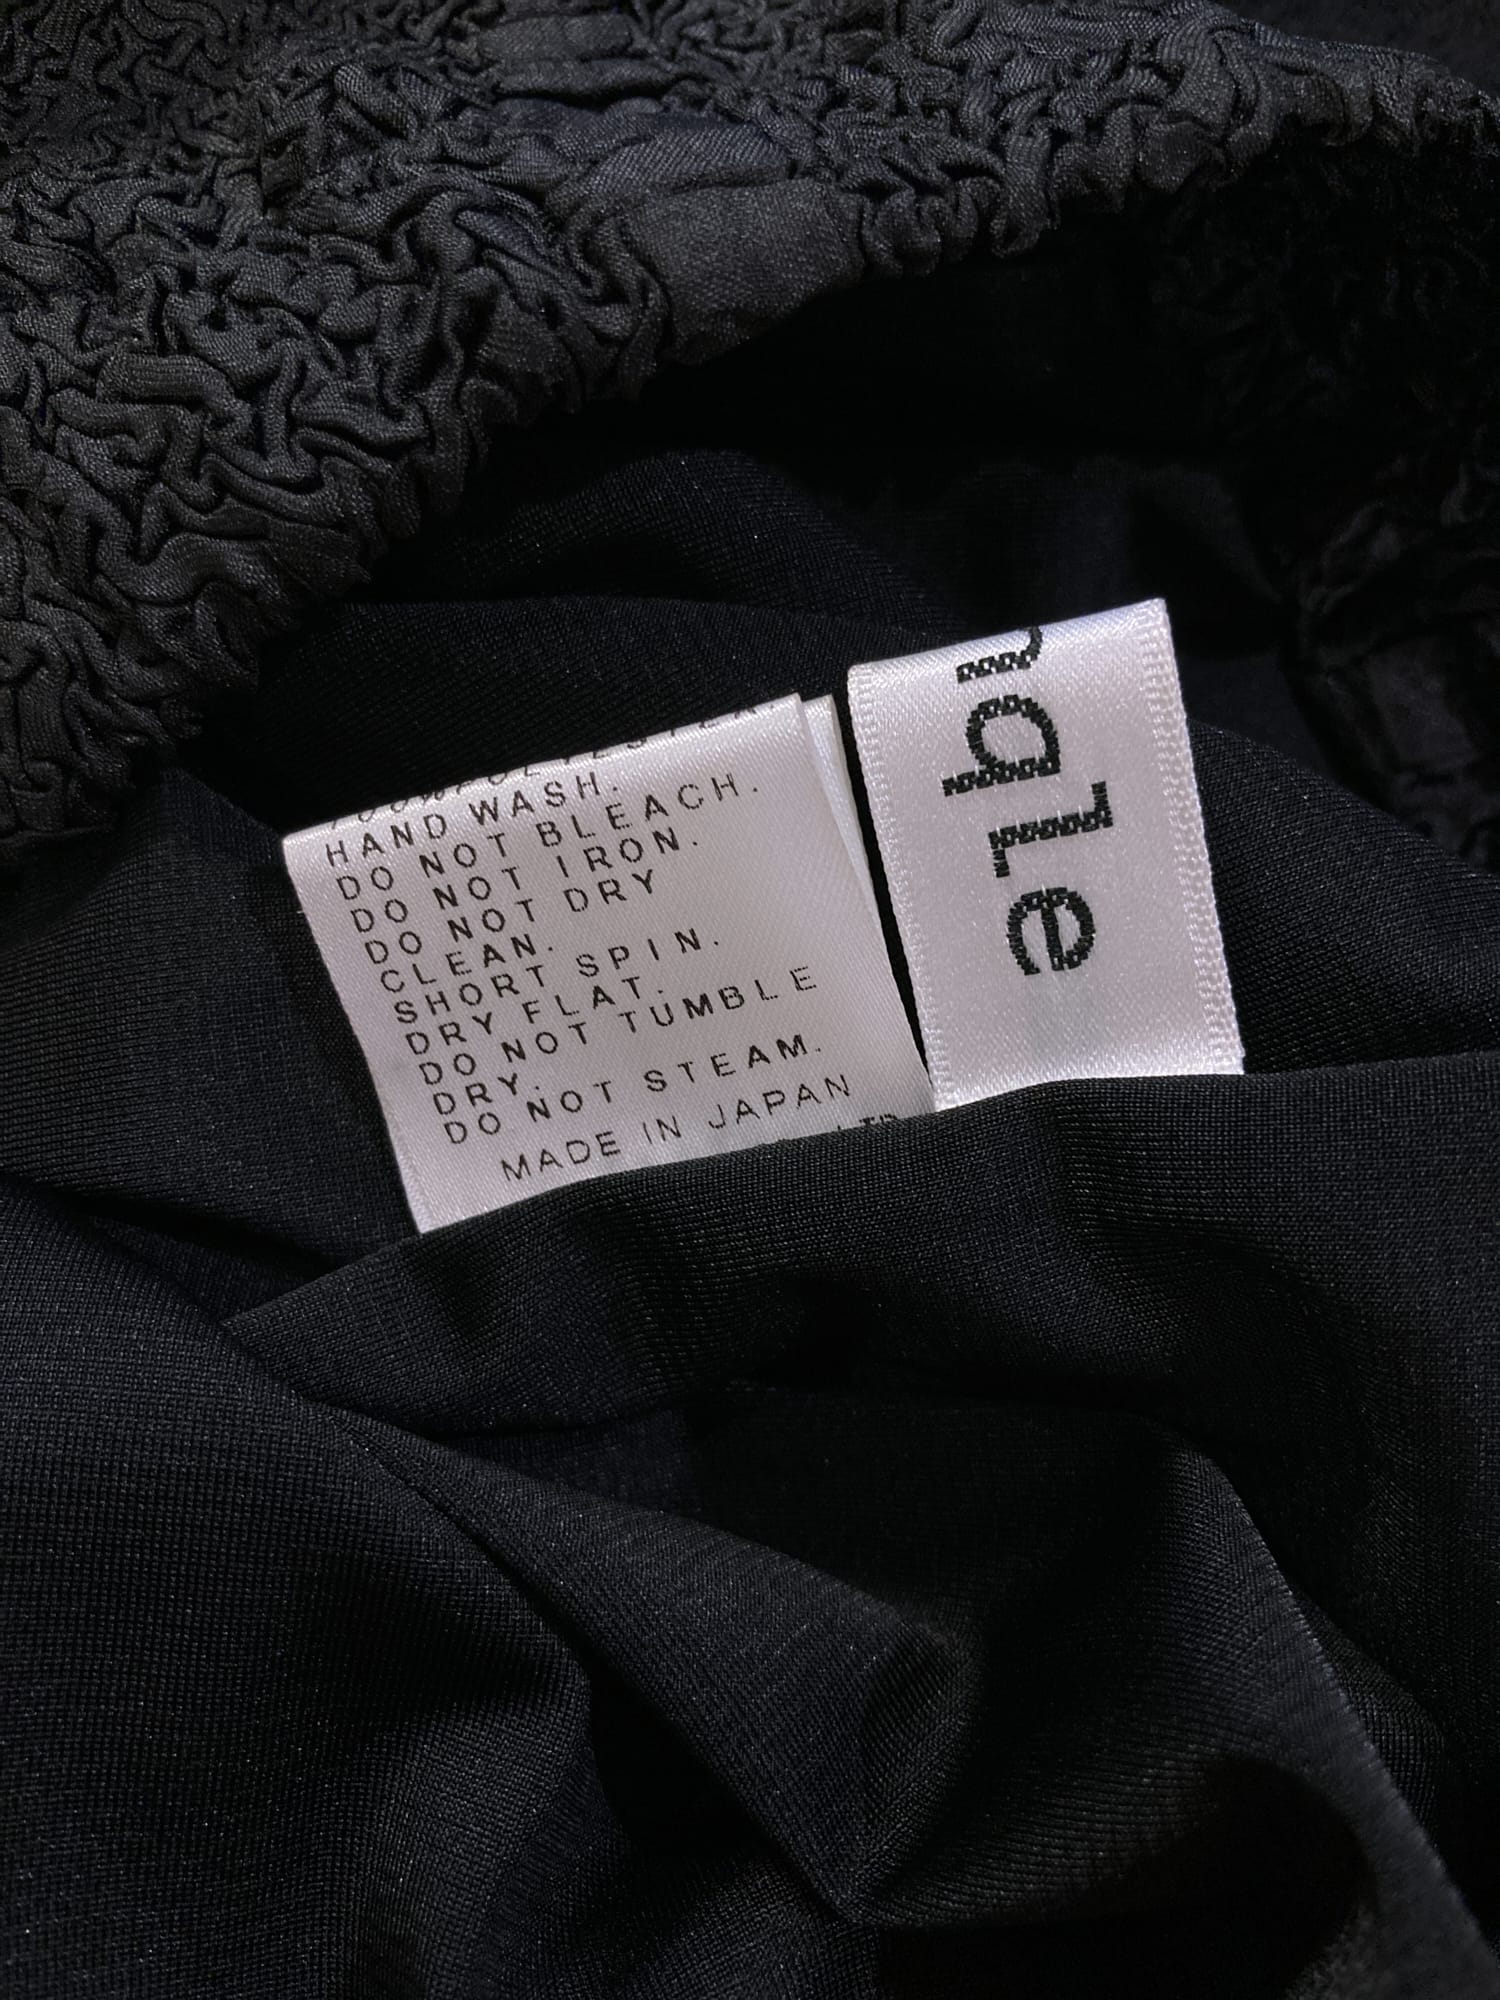 Wrinqle Inoue Pleats black wrinkled polyester elastic waist skirt